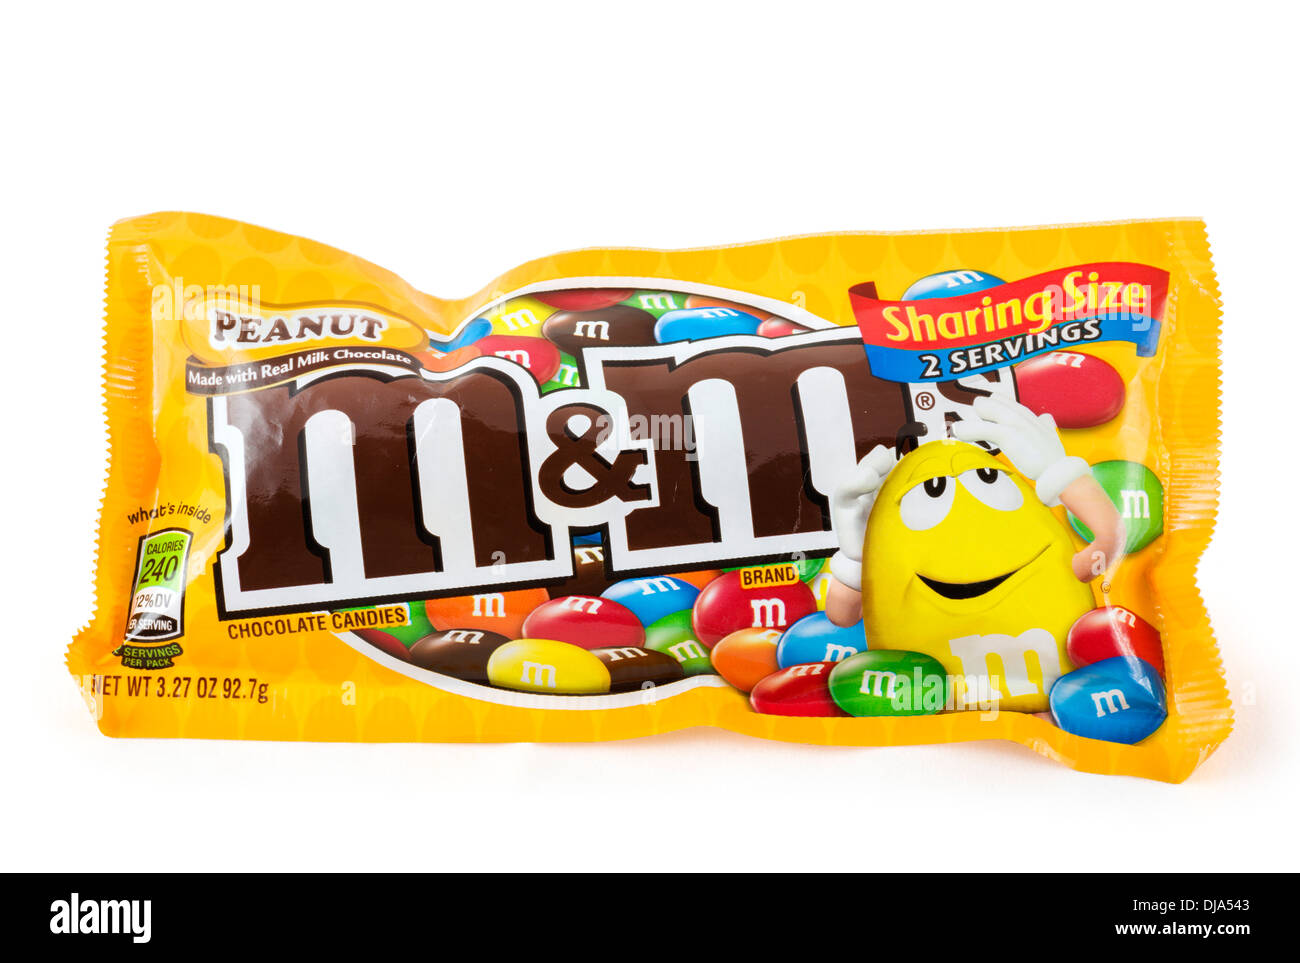 Packet of Peanut M&Ms, USA Stock Photo